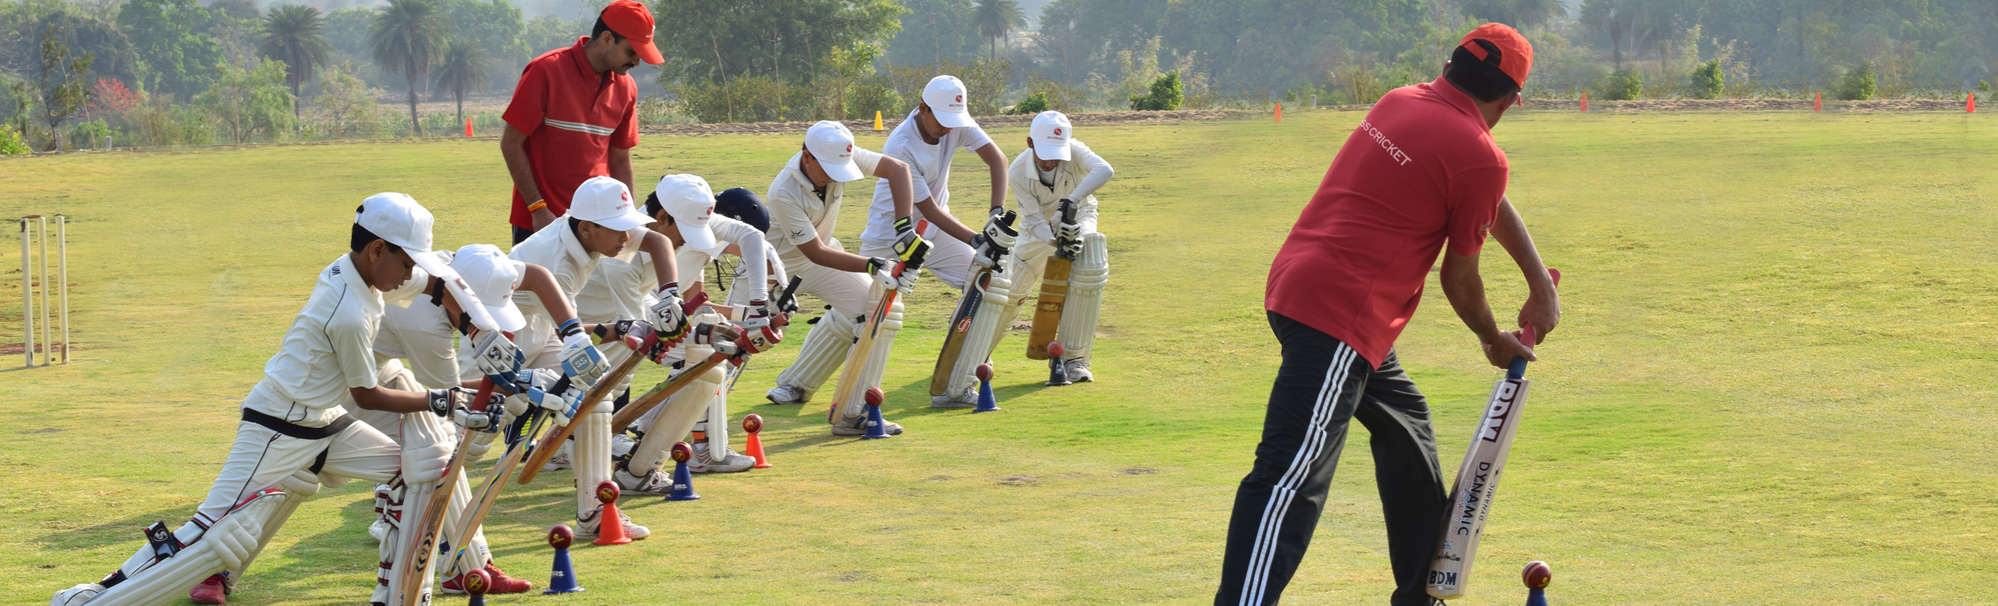 SS Cricket training